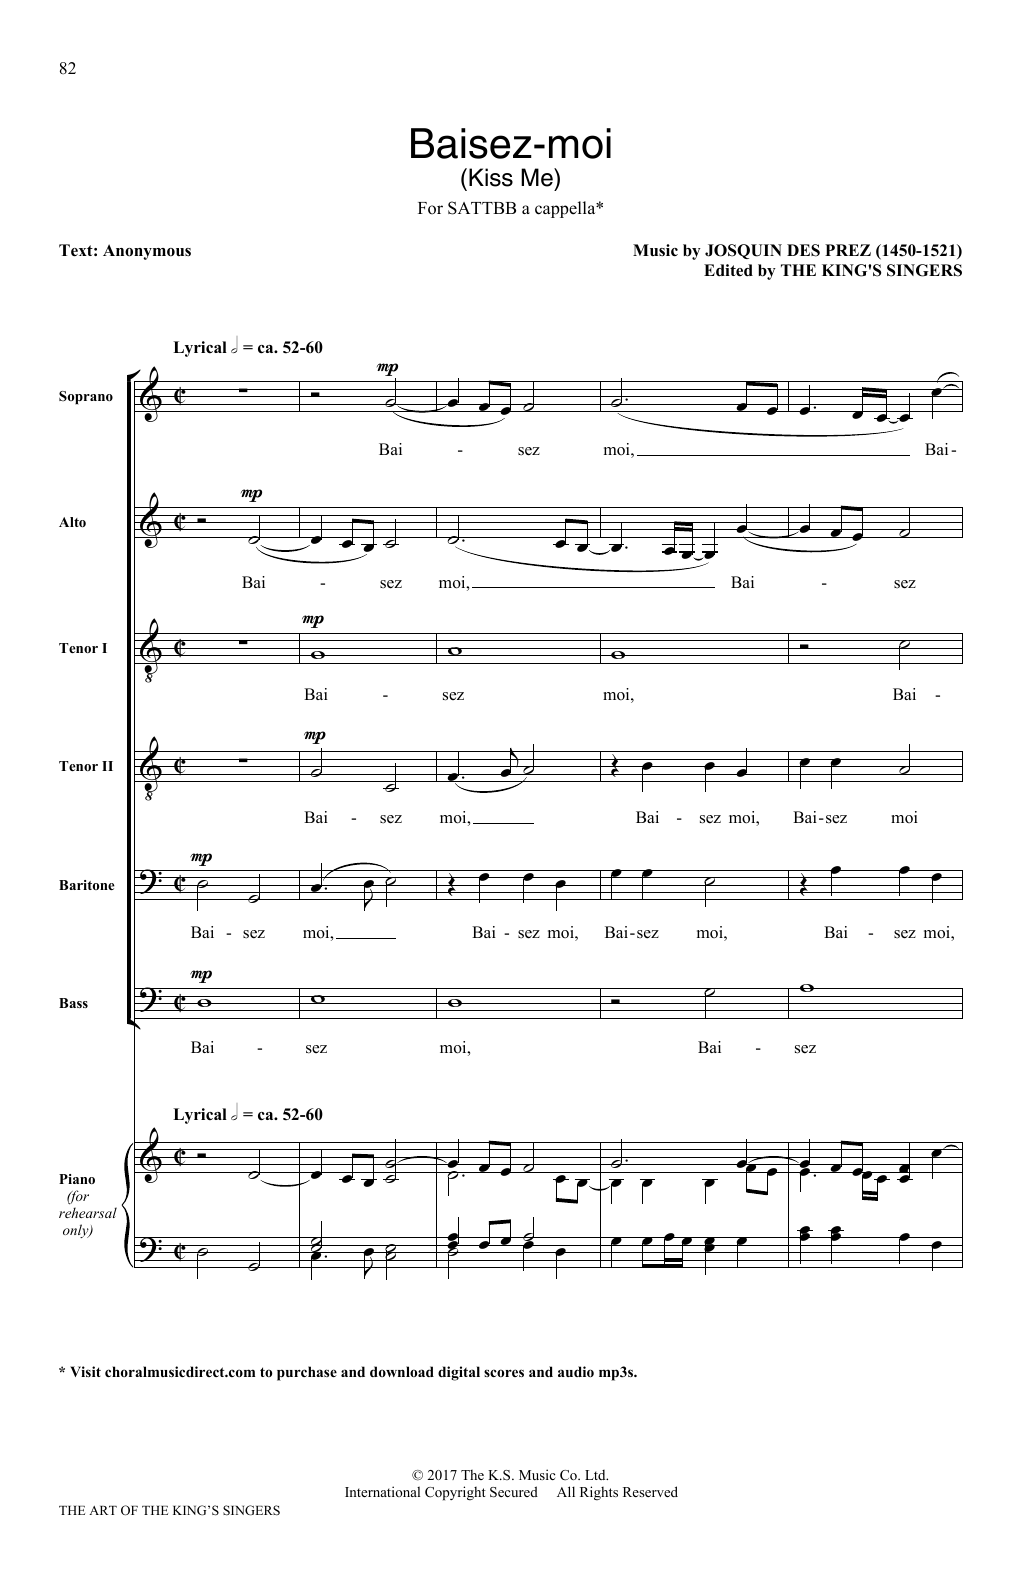 Josquin Des Prez Baisez-moi (Kiss Me) Sheet Music Notes & Chords for SATB - Download or Print PDF